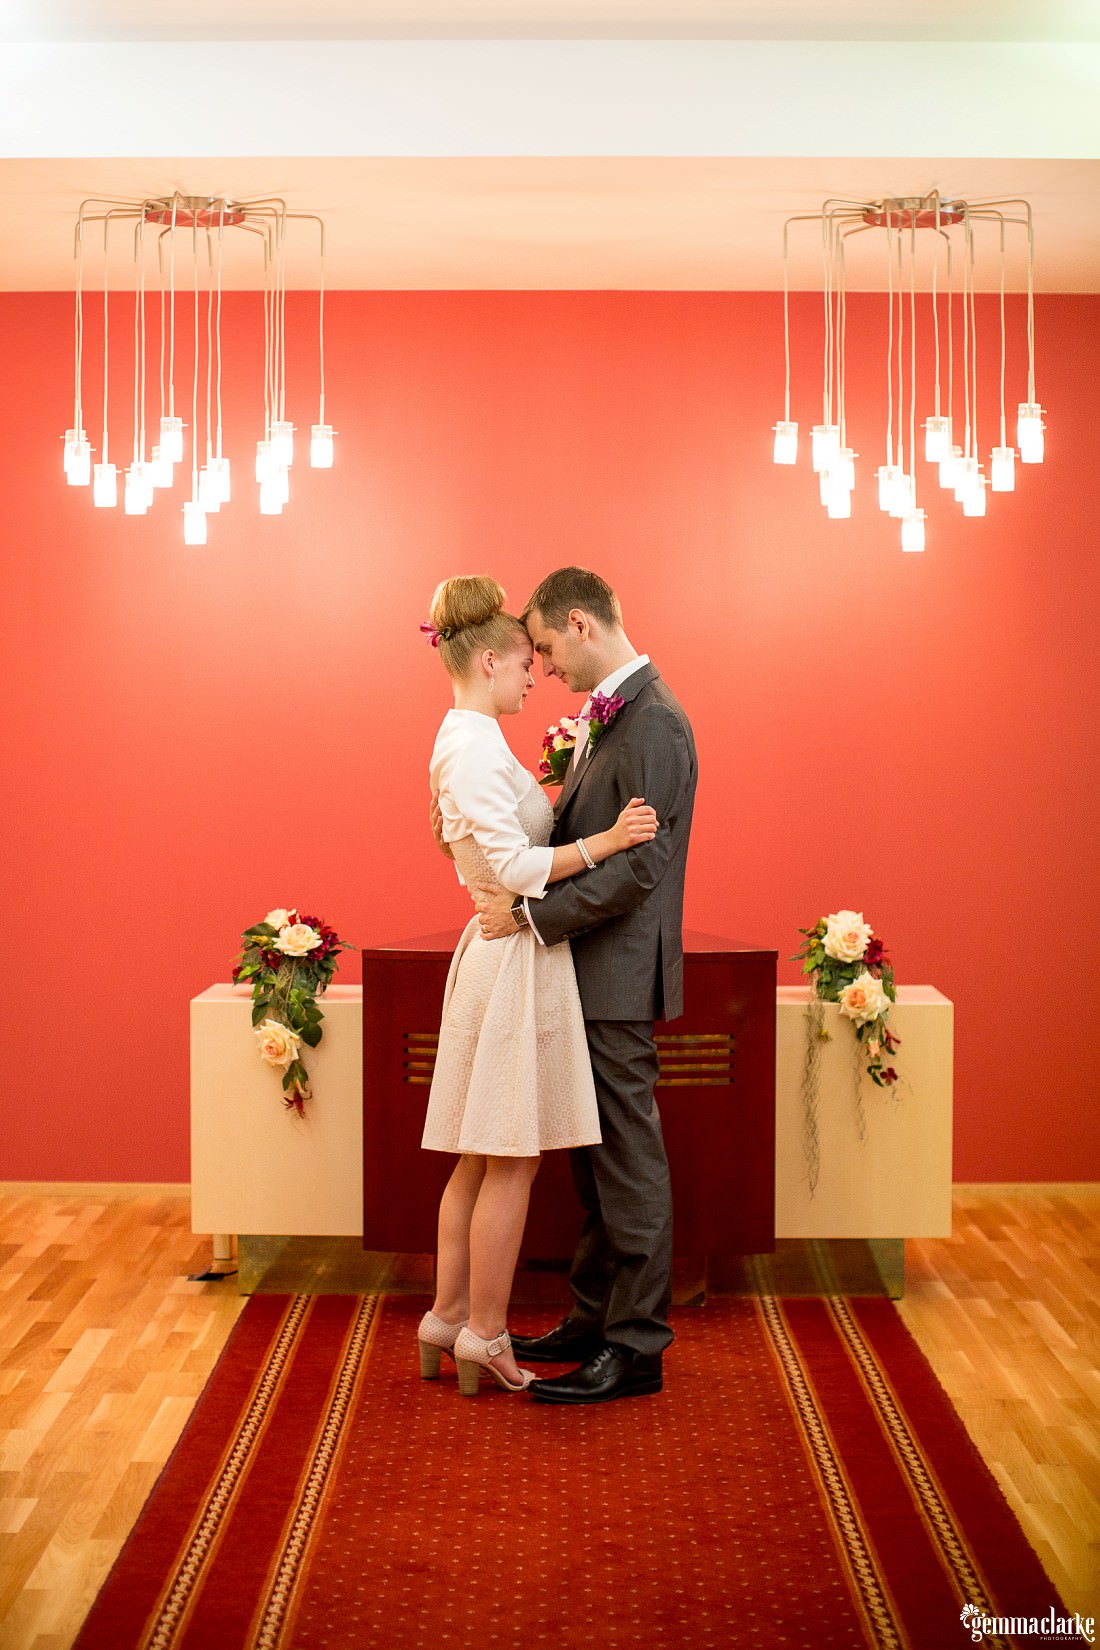 gemmaclarkephotography_elopement-in-europe_small-wedding-tallinn_teele-and-kristen_0026